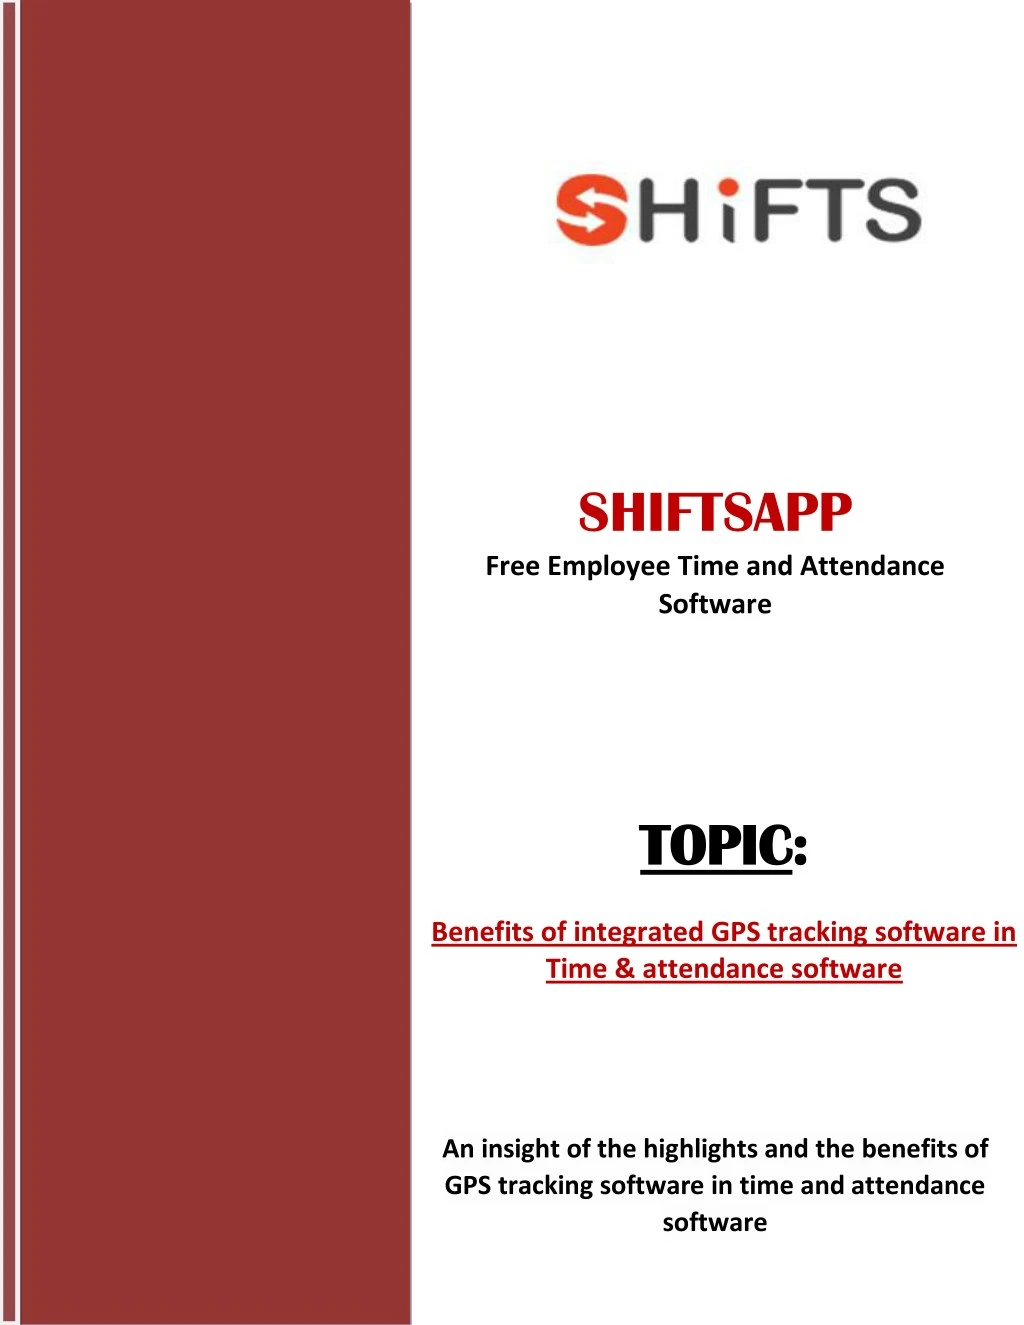 shiftsapp free employee time and attendance